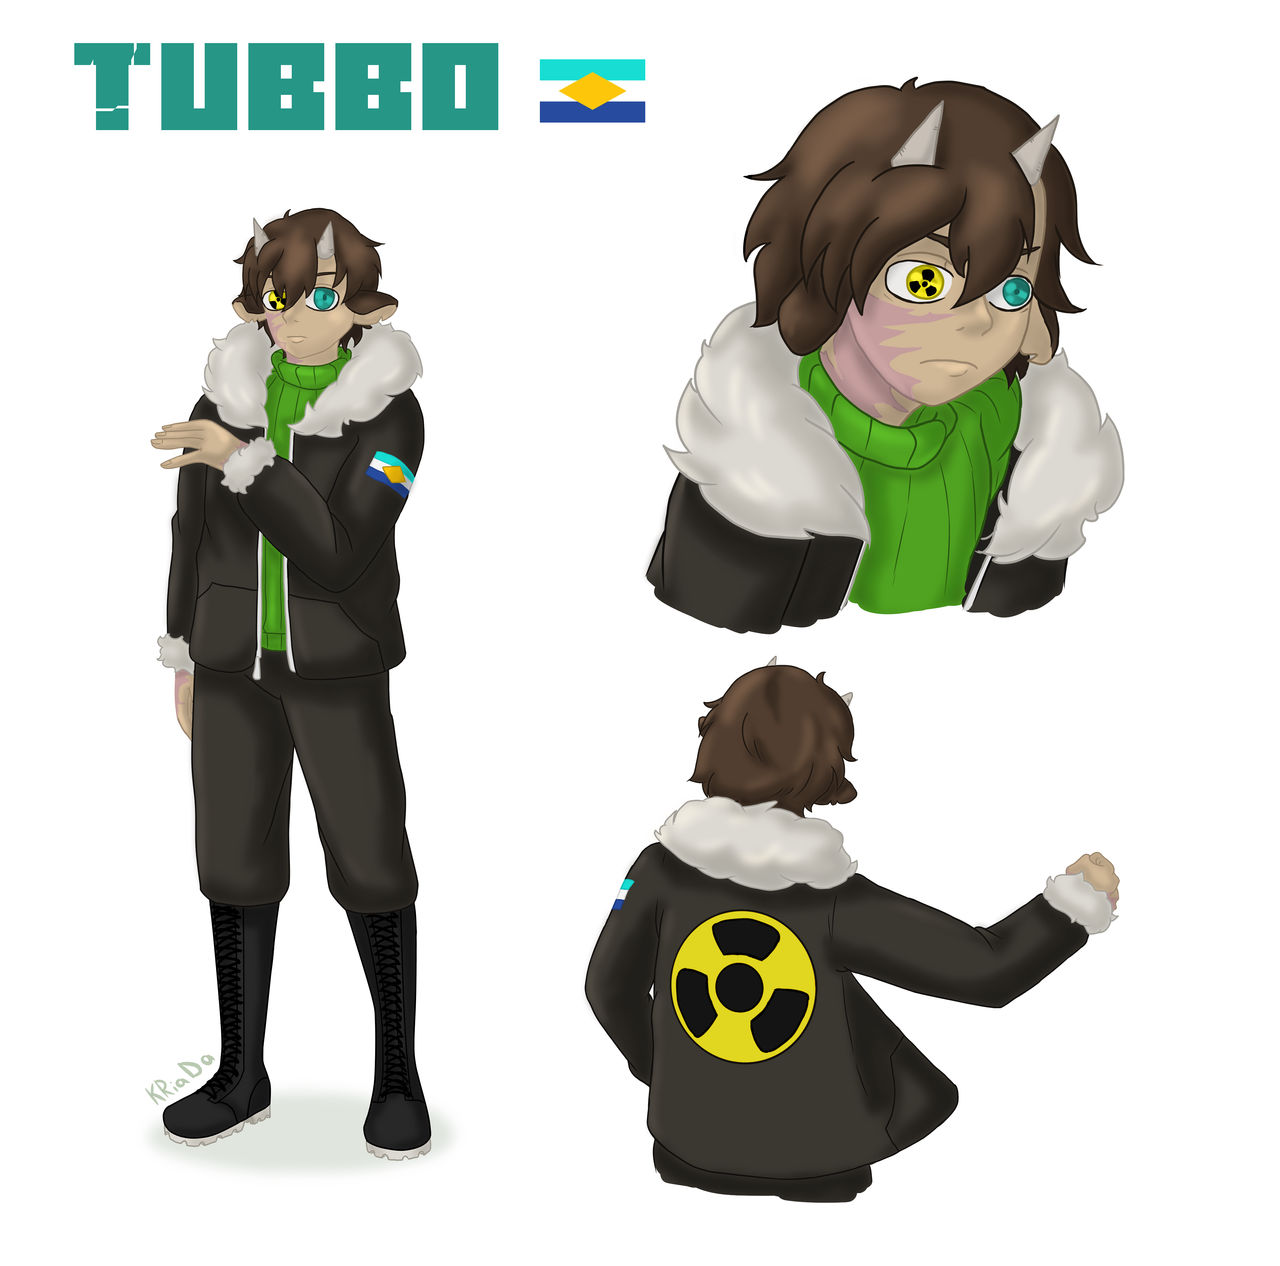 Tubbo by sokoistrying on DeviantArt